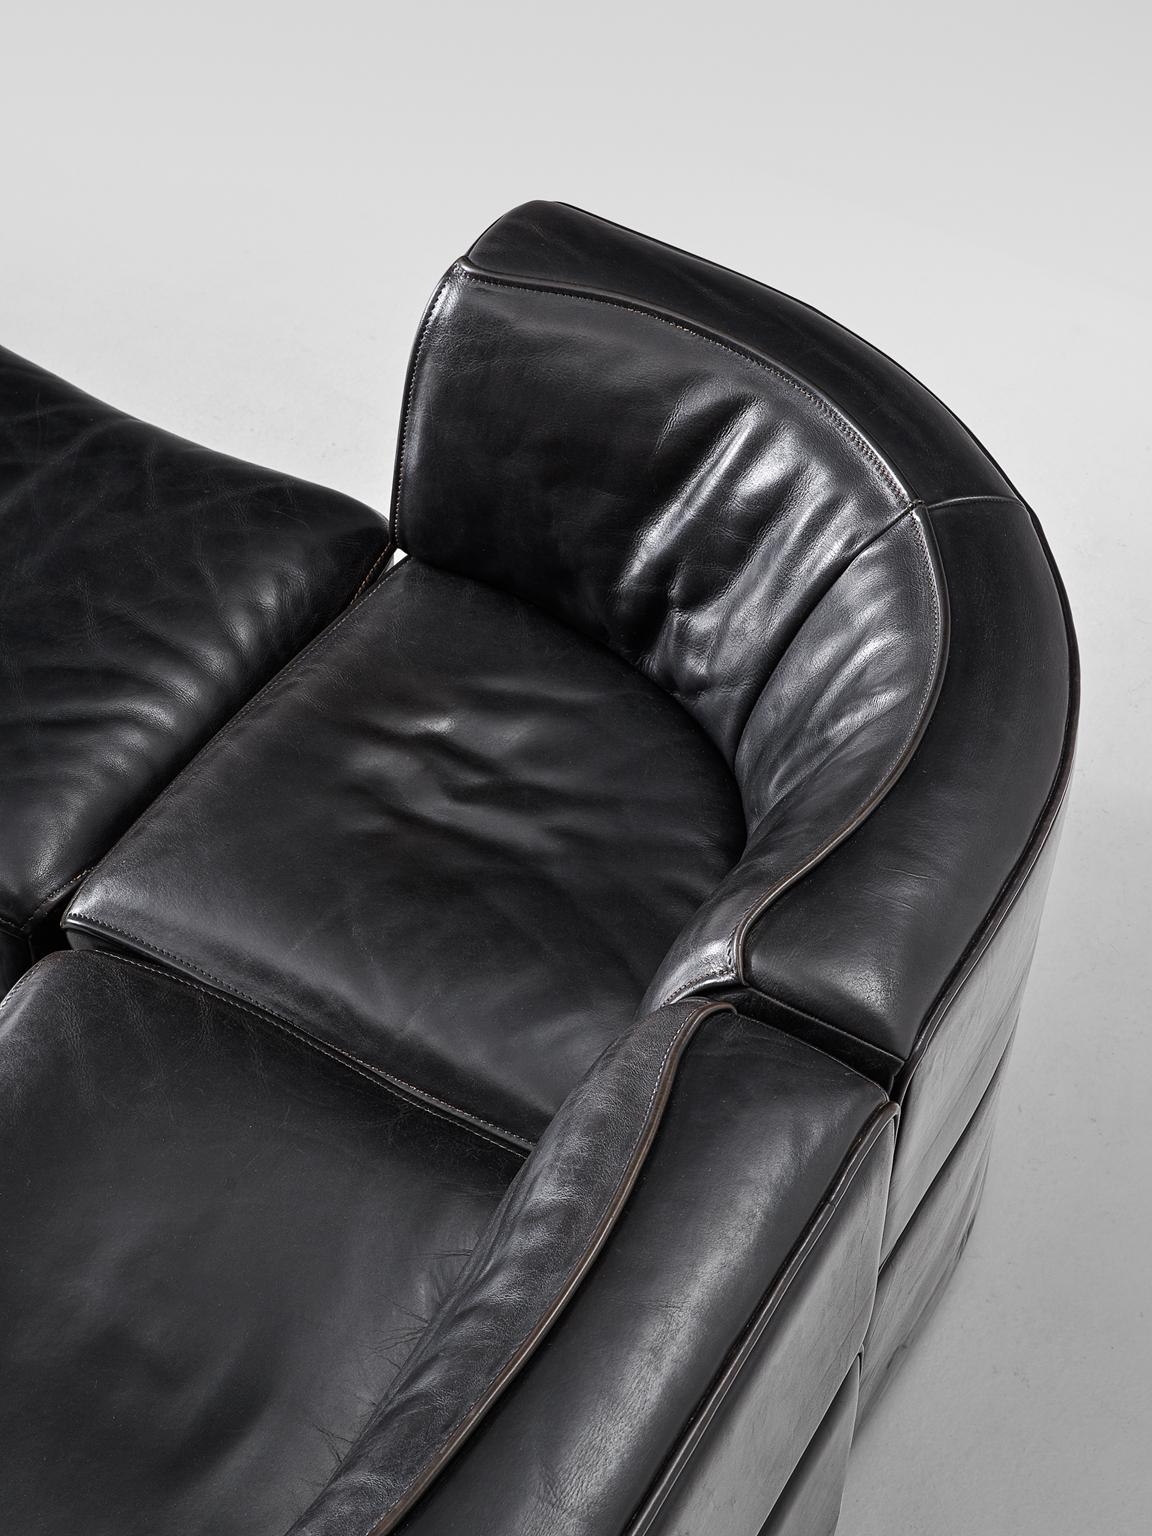 De Sede 'Ds-15' Modular Sofa in Black Buffalo Leather (Leder)